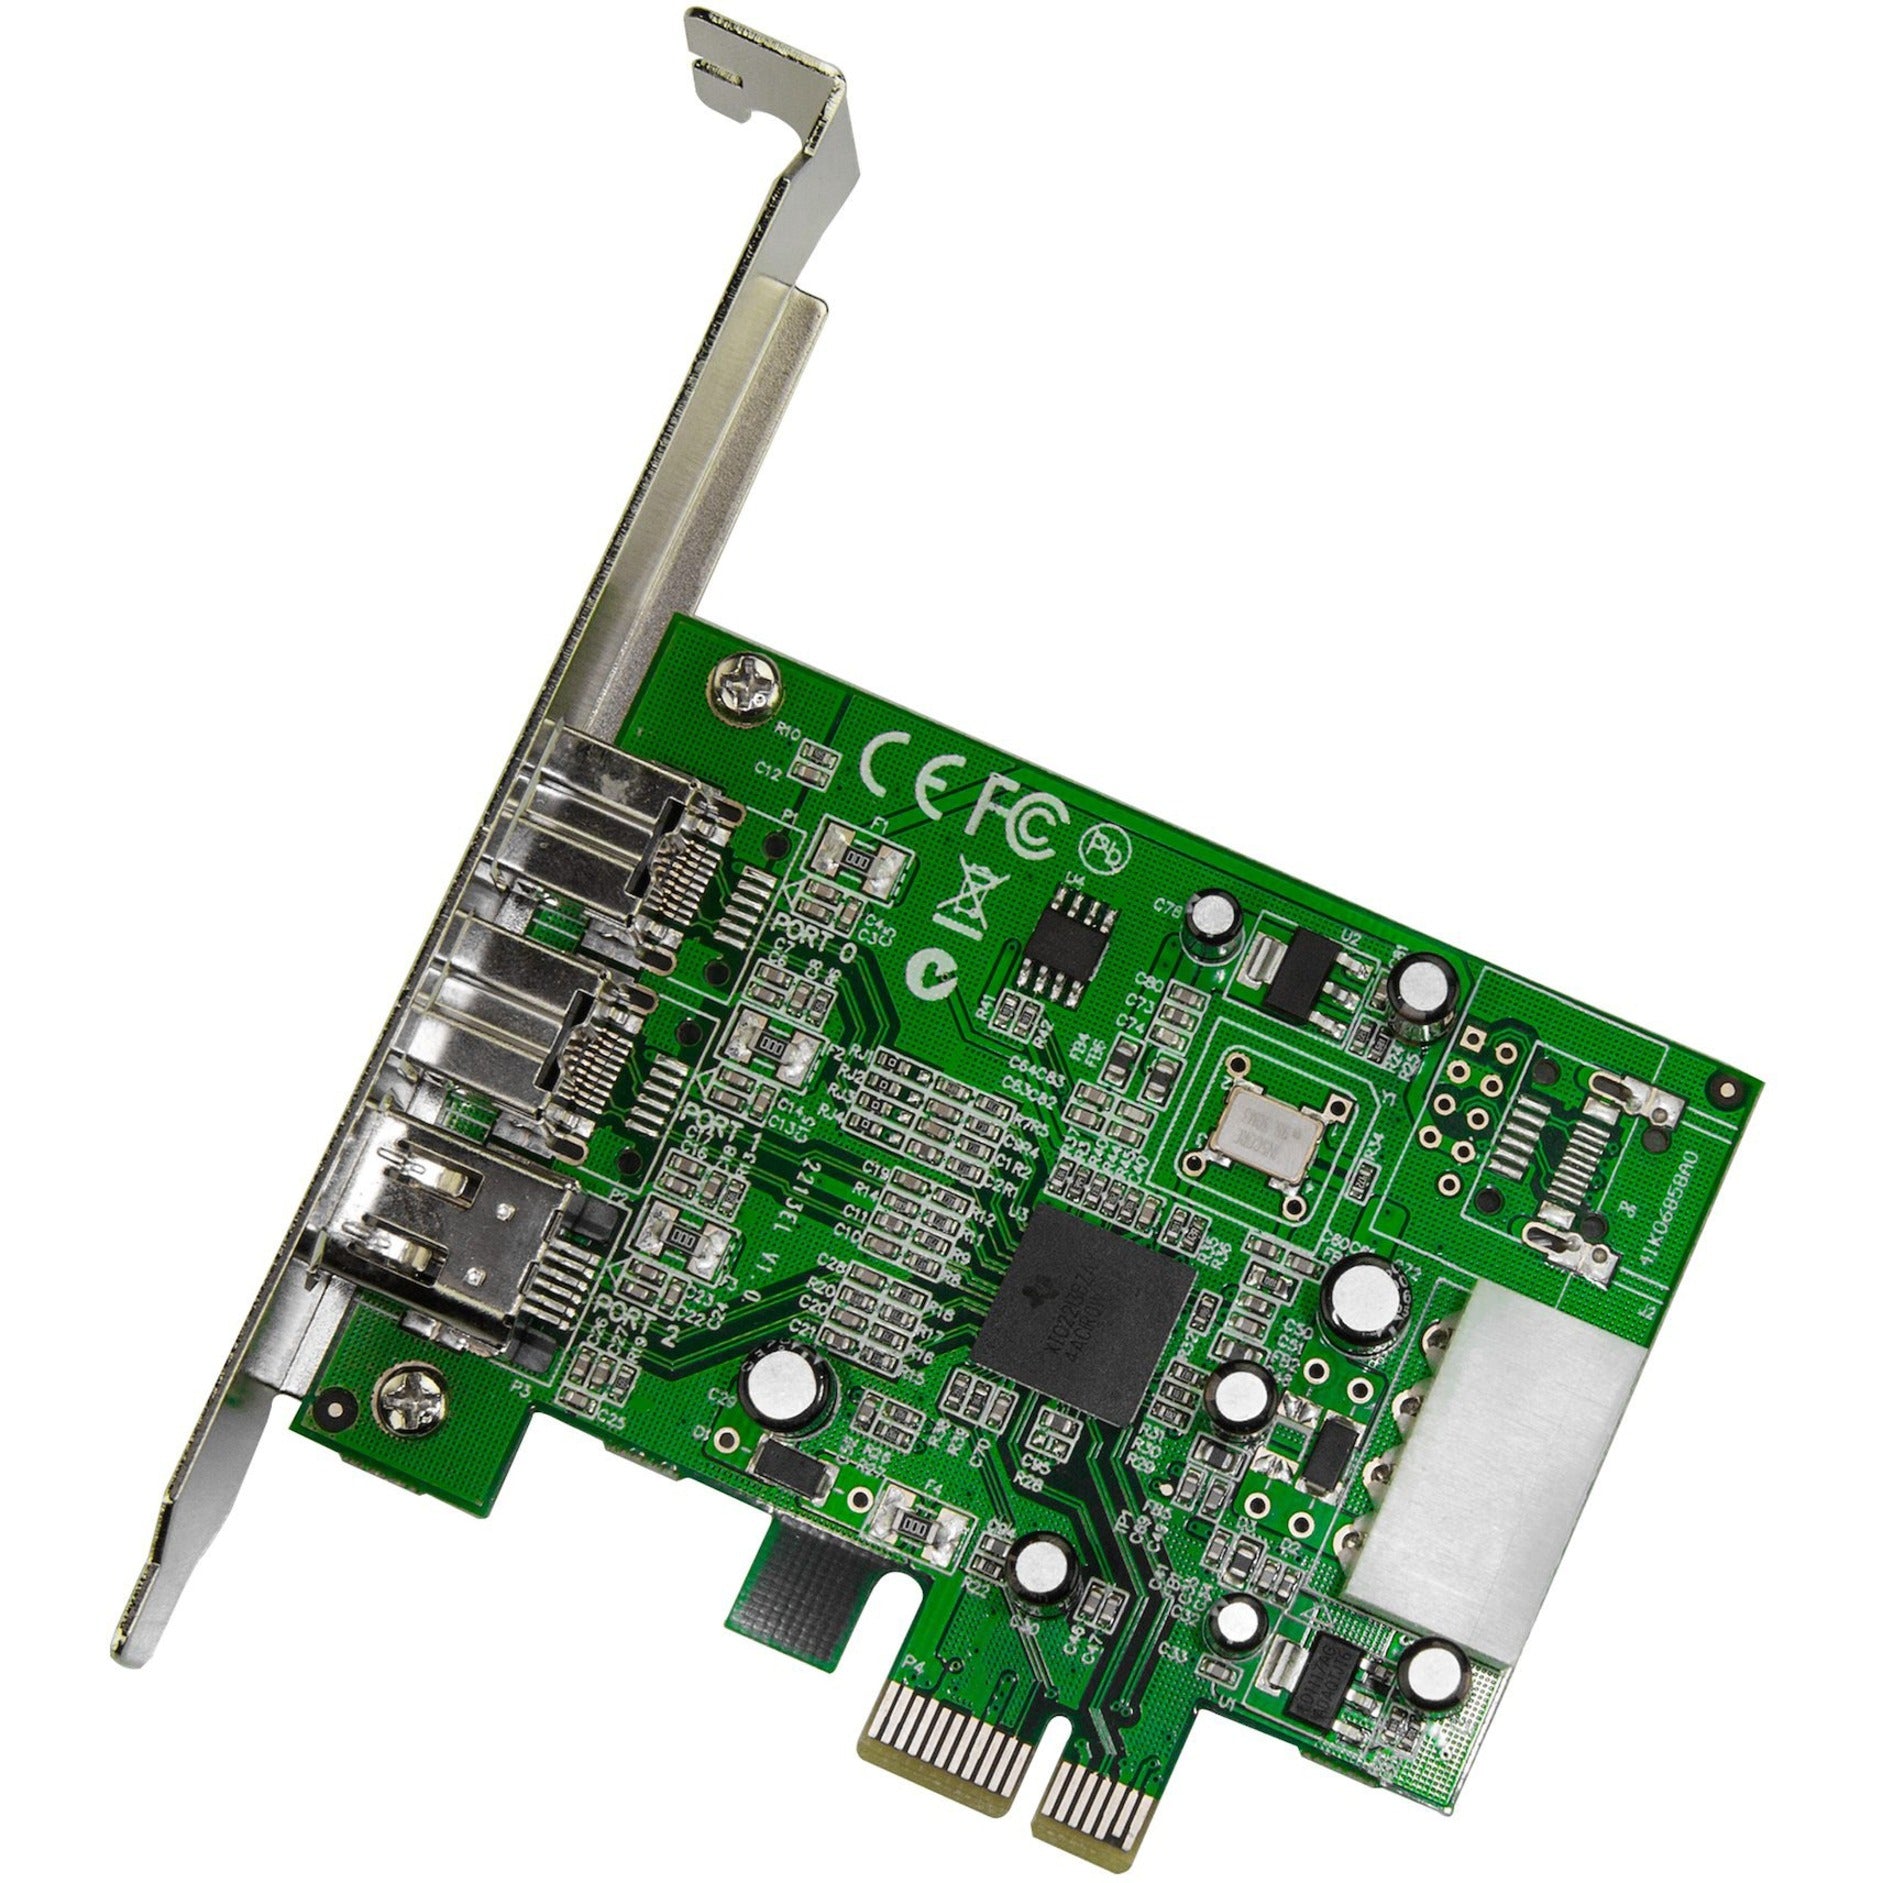 StarTech.com PEX1394B3 3 Port 2b 1a 1394 PCI Express FireWire Card Adapter, High-Speed Data Transfer and Easy Connectivity